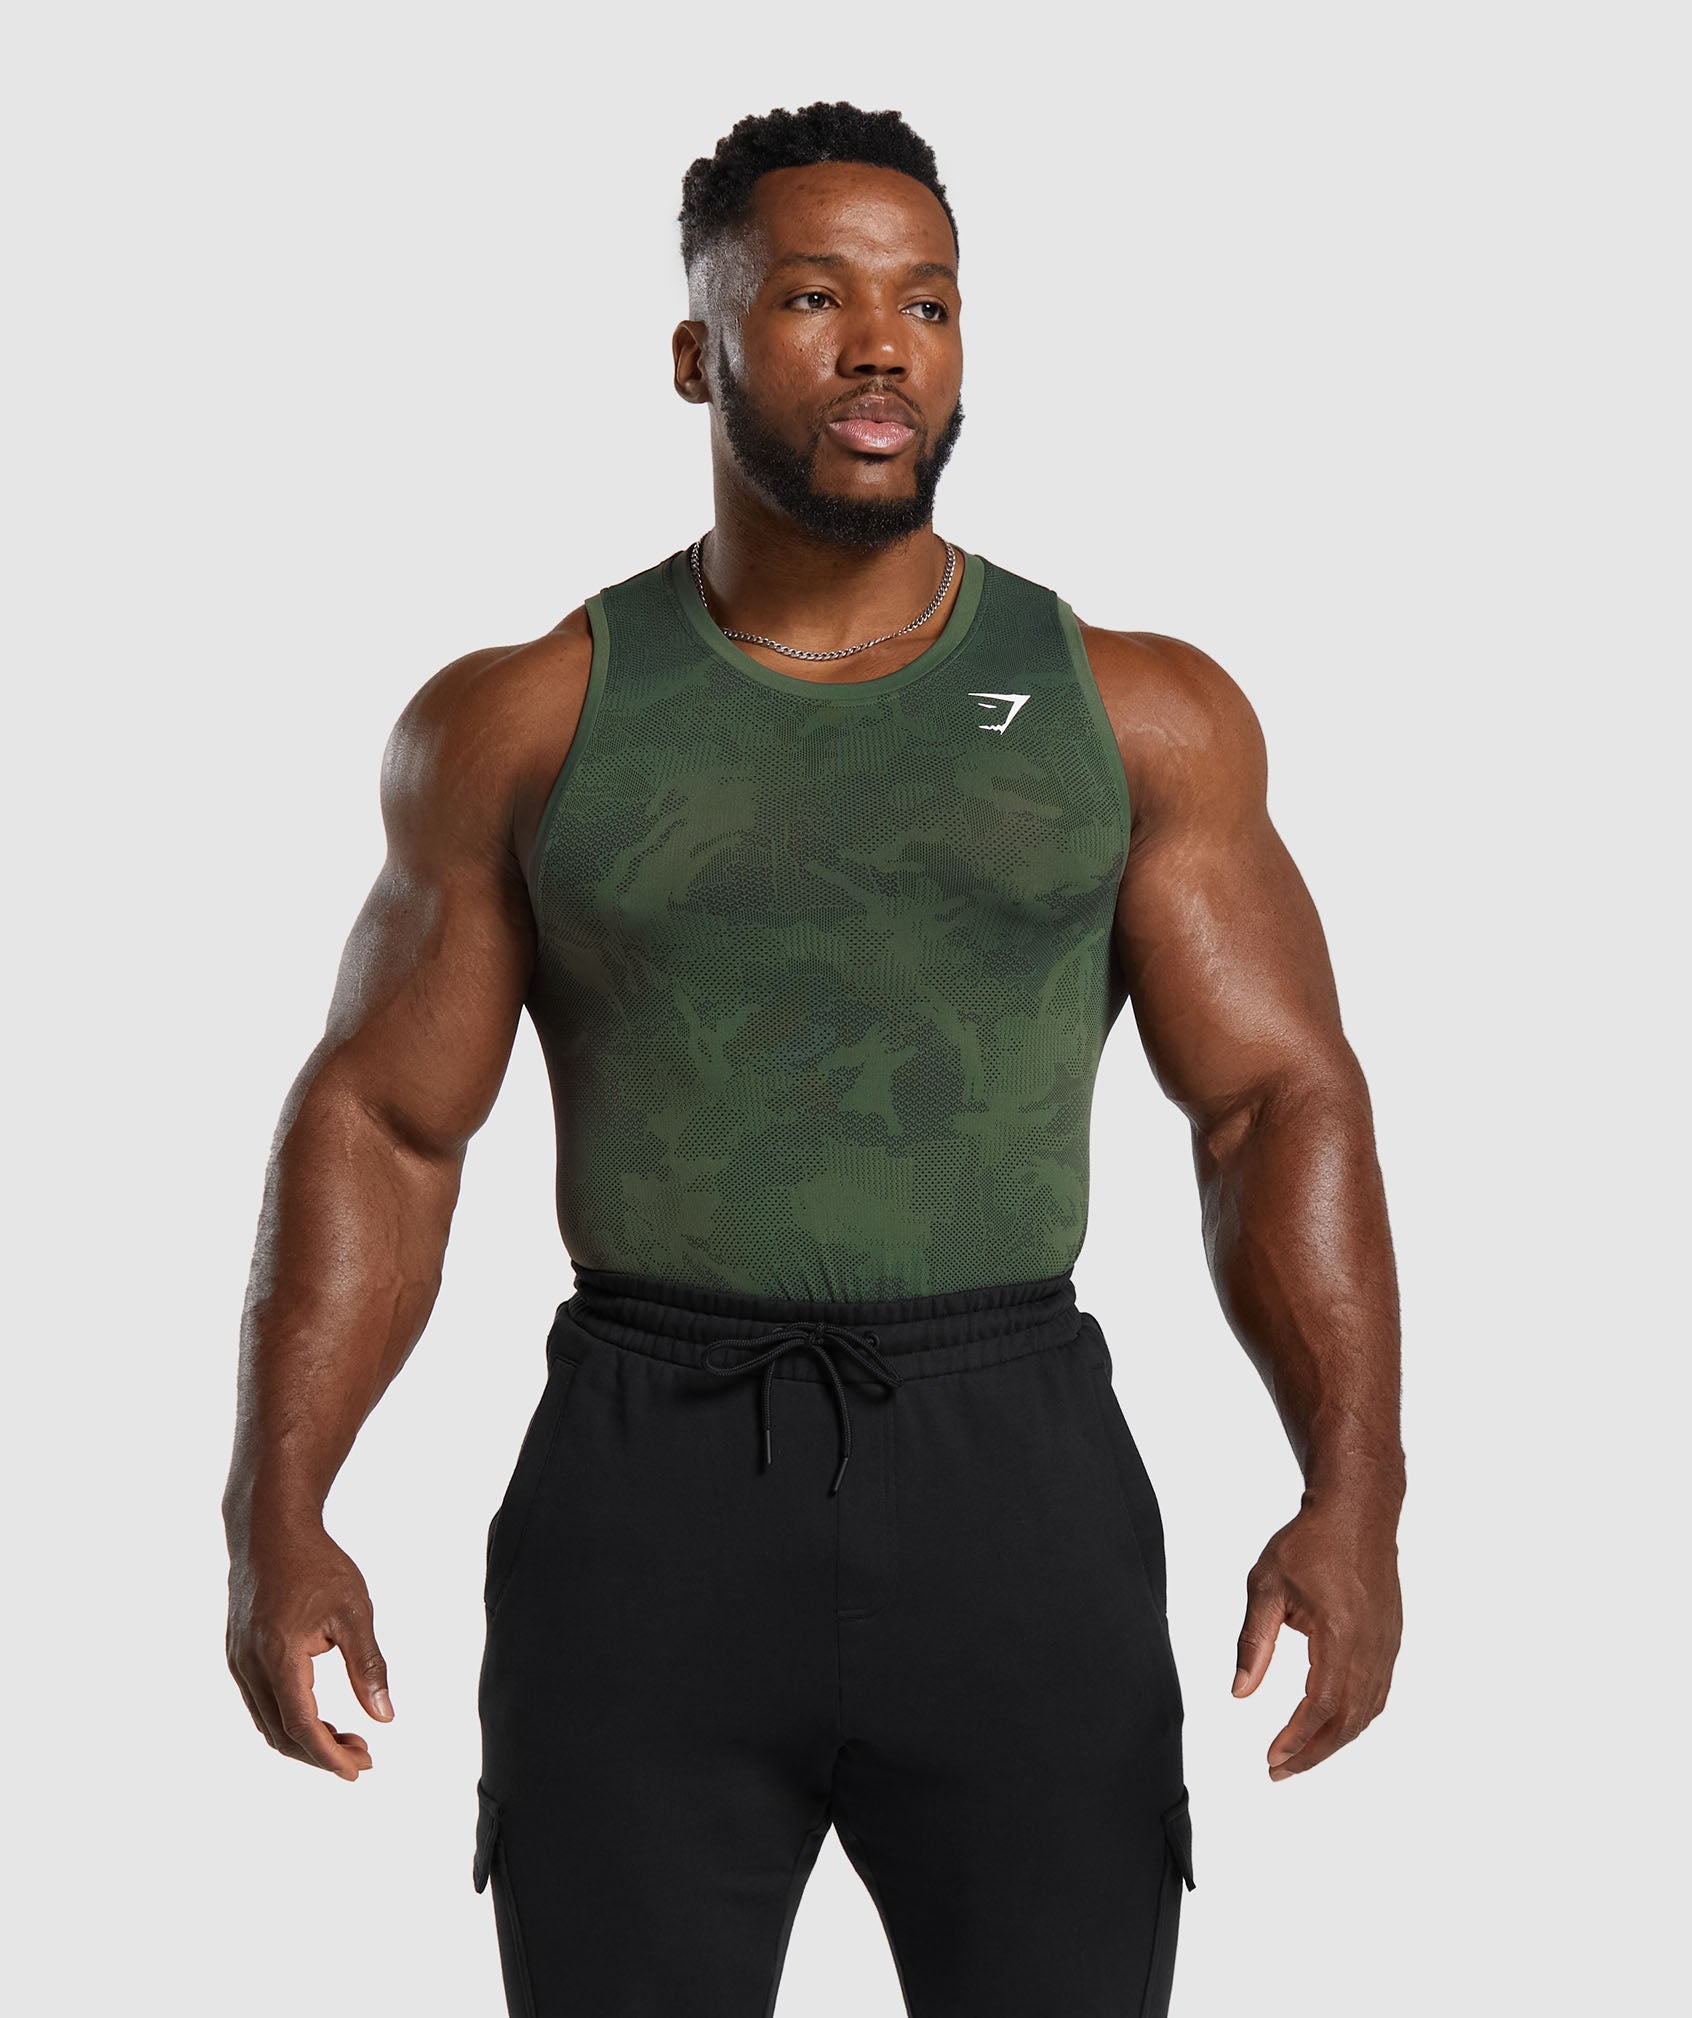 Gymshark Element Stringer - White/Black  Gym tank tops men, Gym tank tops,  Gym outfit men